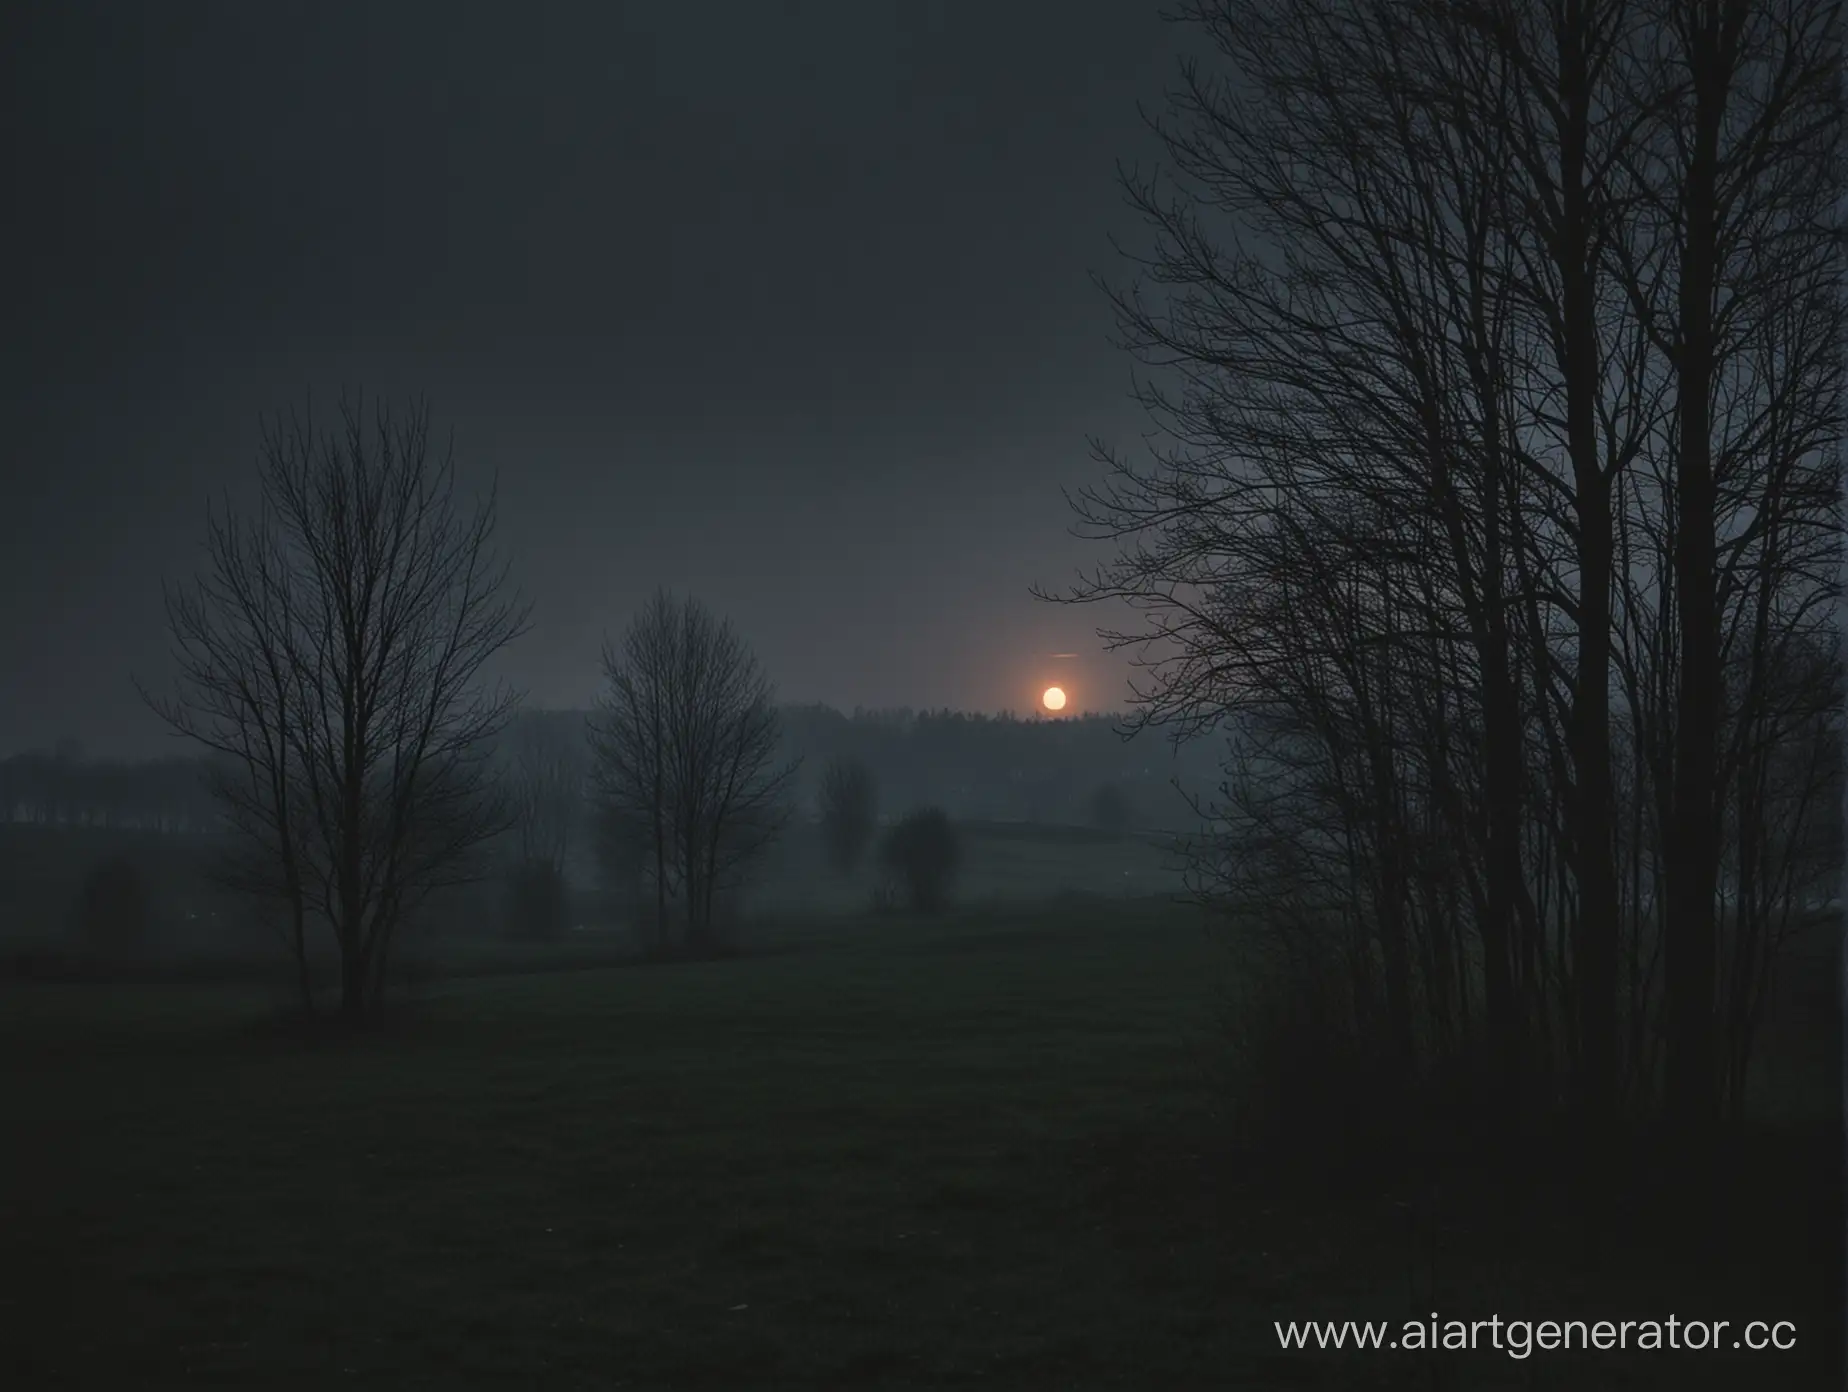 Serene-Nighttime-Landscape-Dark-Evening-Scene-with-Moonlight-Glow